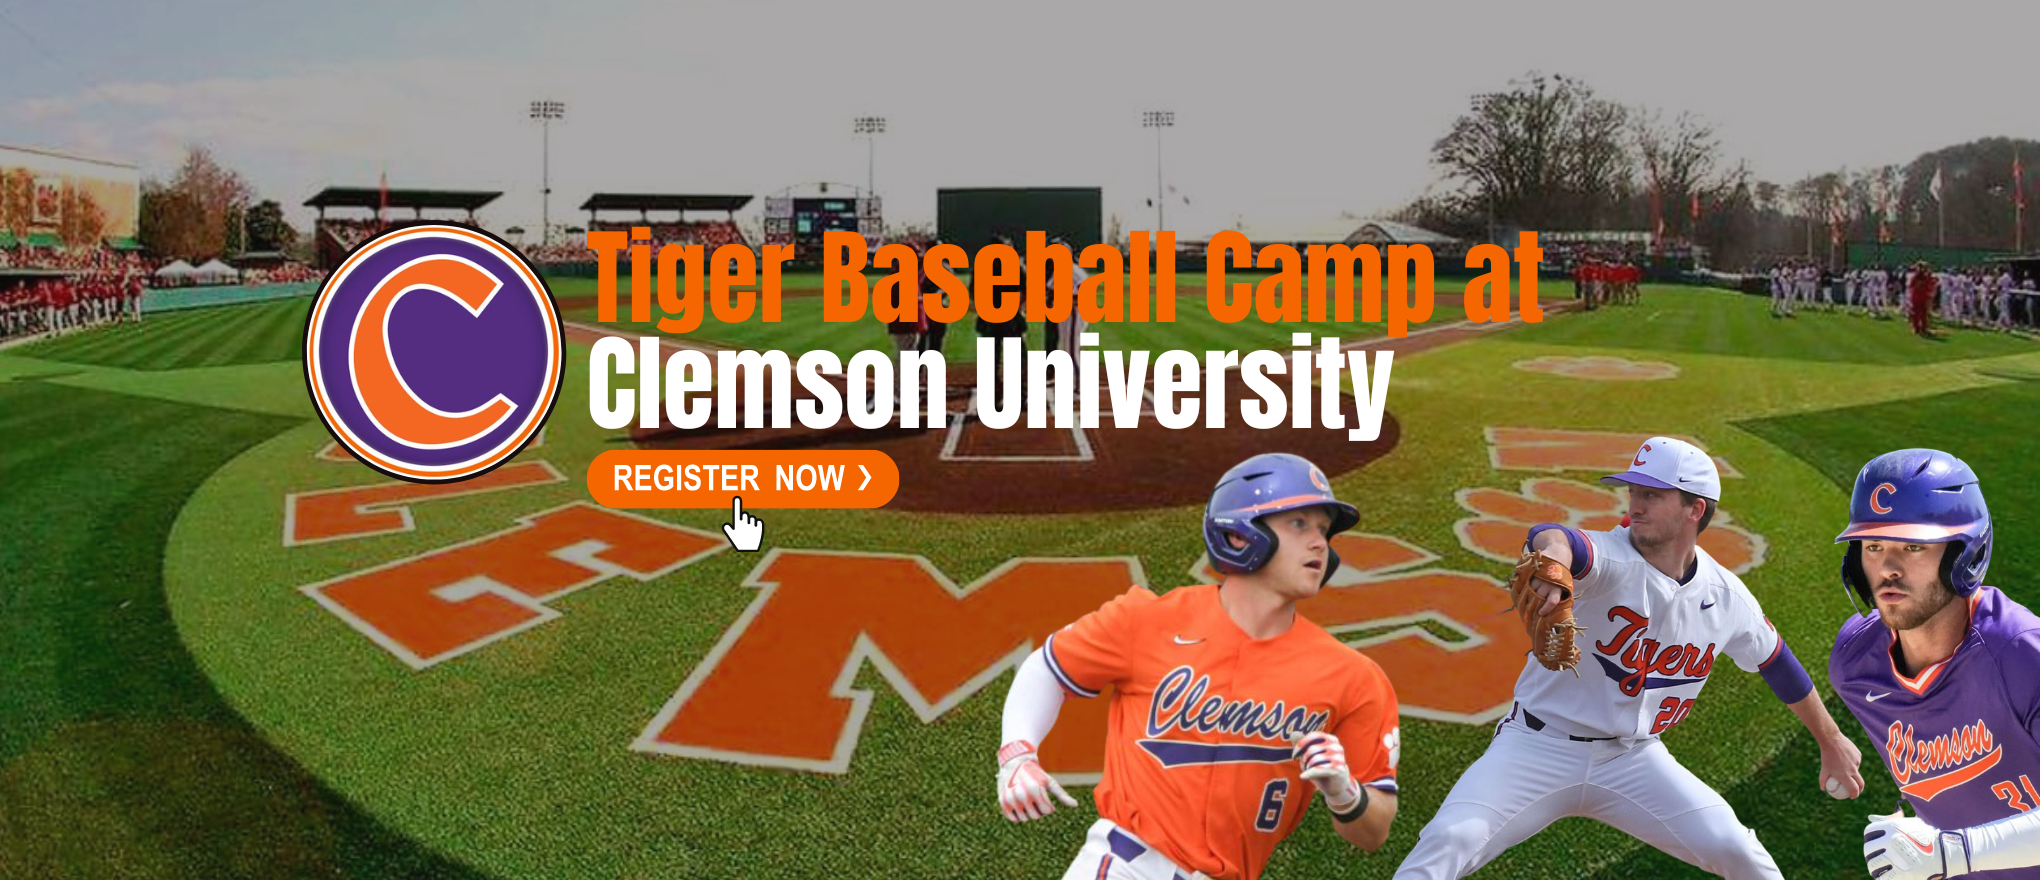 Tiger Baseball Camp at Clemson University